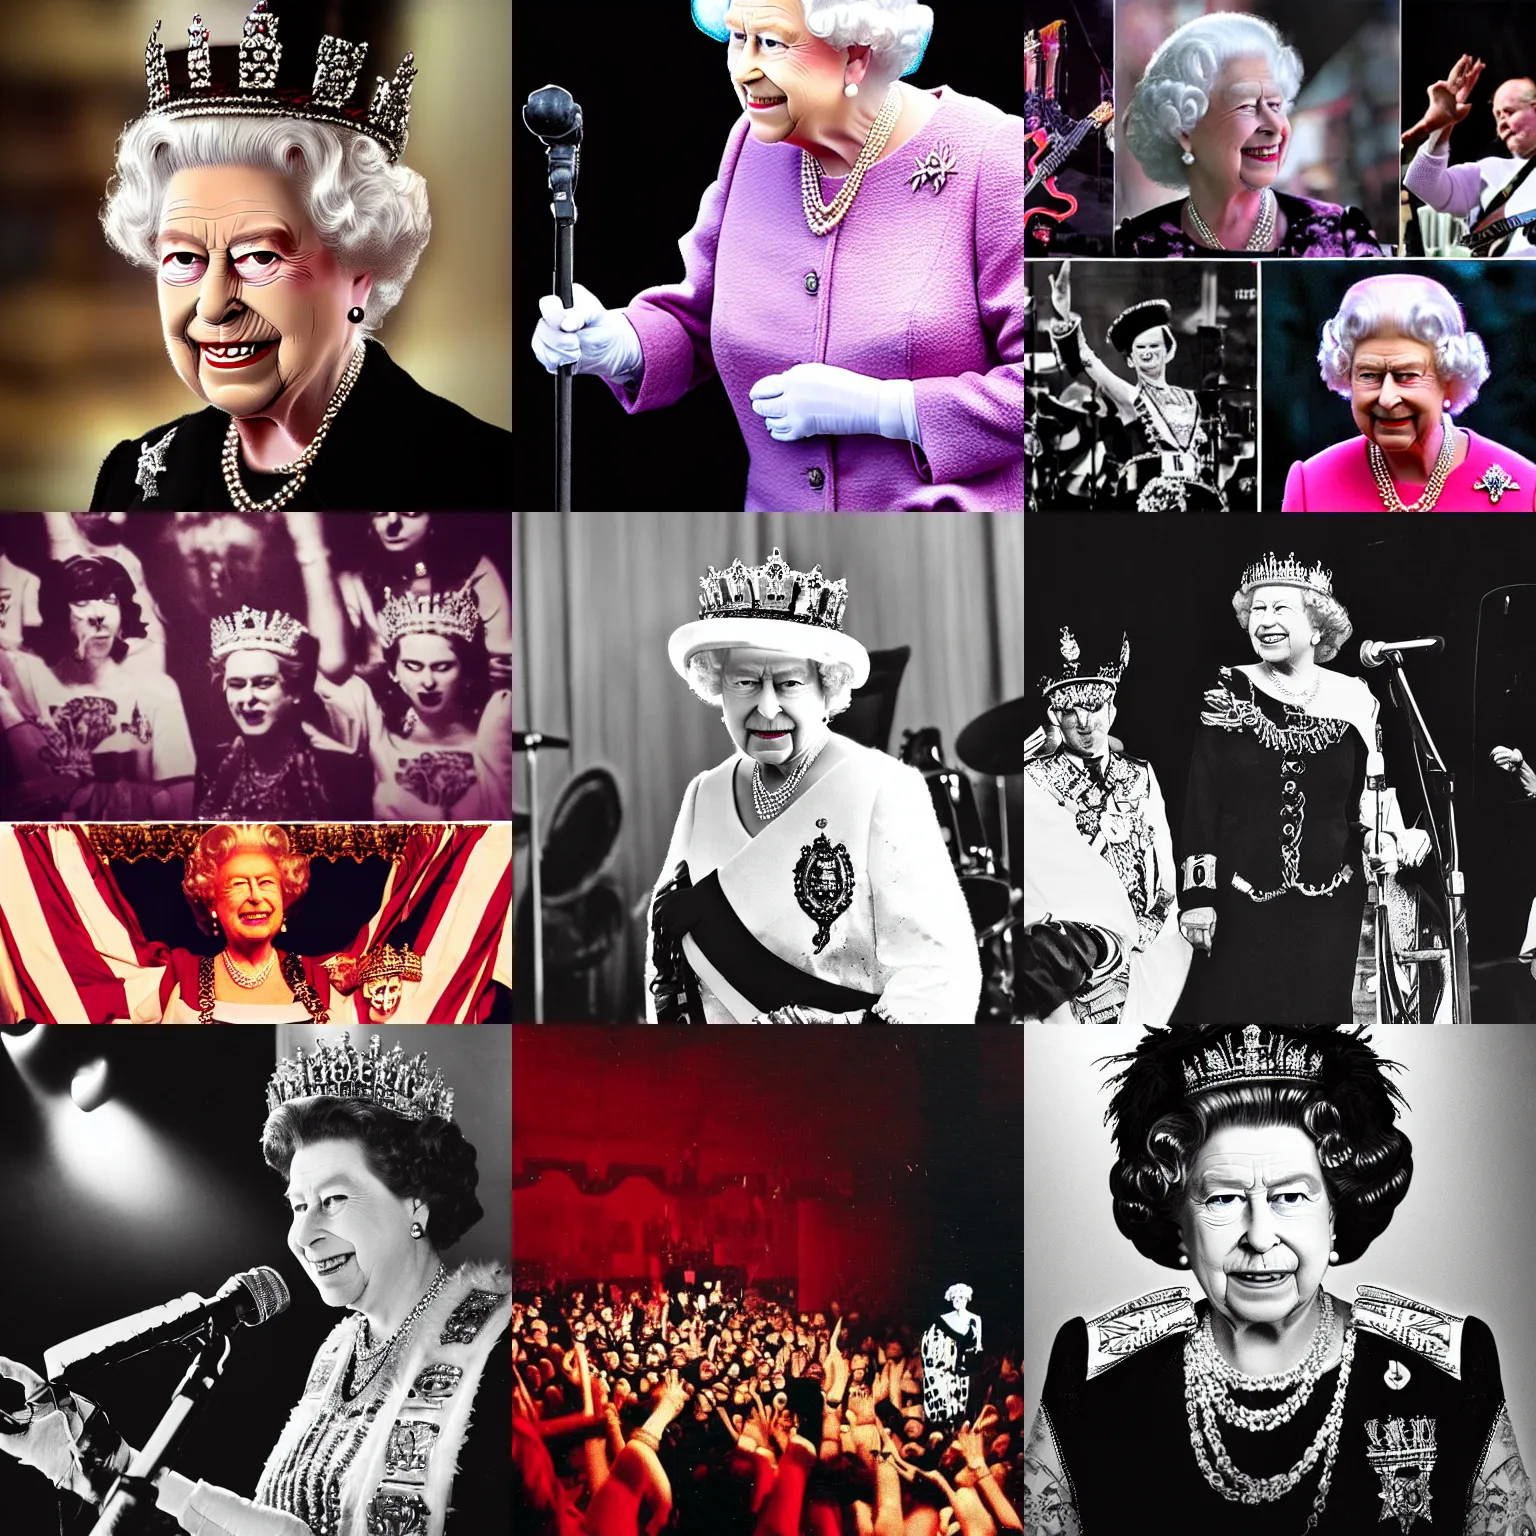 Prompt: Queen Elizabeth II, punk rock show, rock concert, realistic photo, dramatic light, hyper realistic